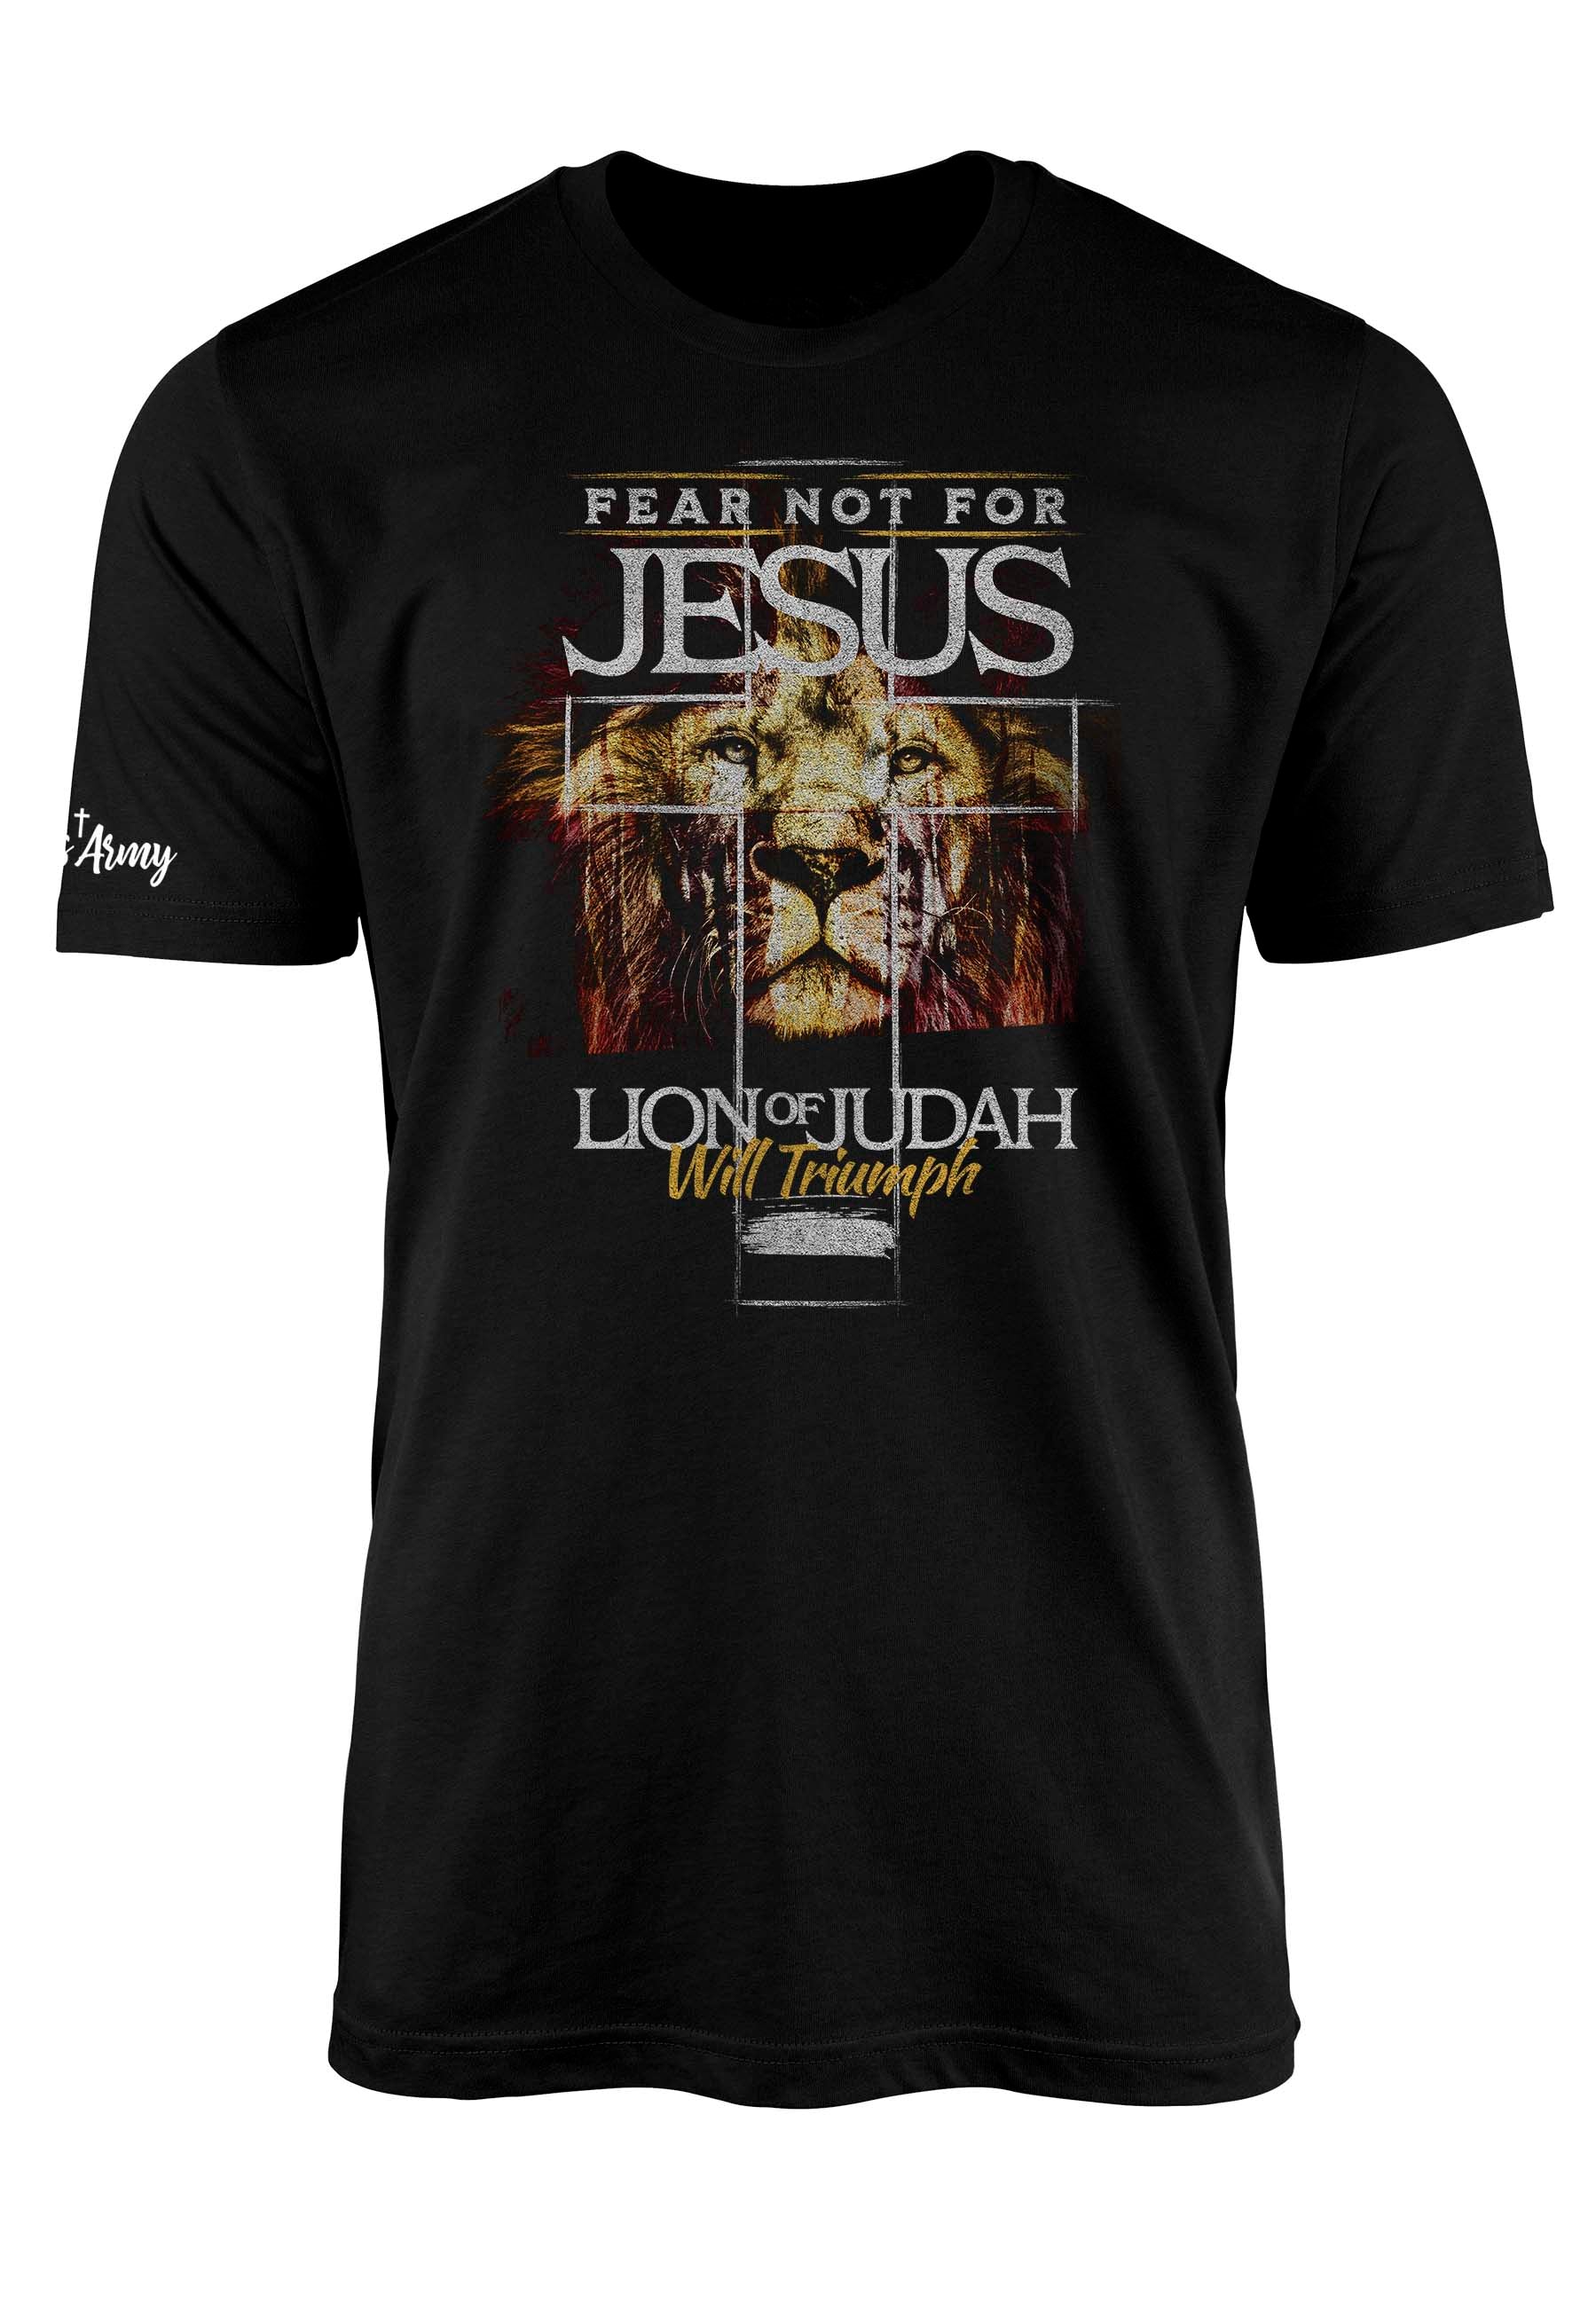 Jesus Lion of Judah t-shirt in black